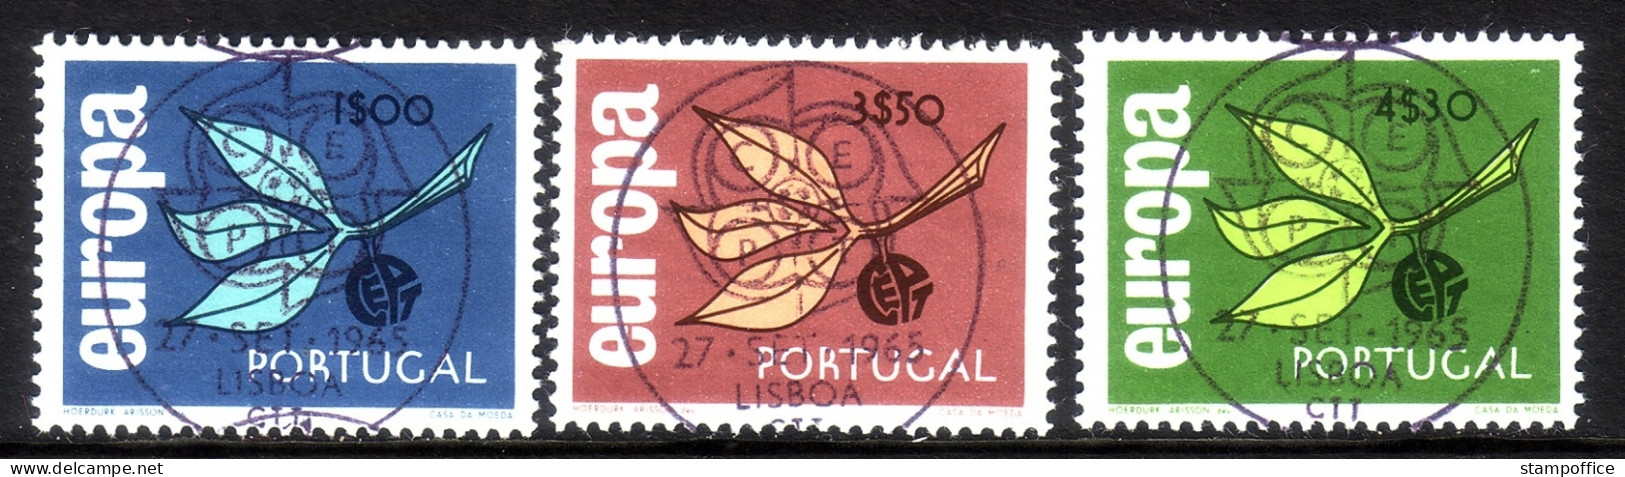 PORTUGAL MI-NR. 990-992 O (VOLLSTEMPEL) EUROPA 1965 ZWEIG - Gebraucht